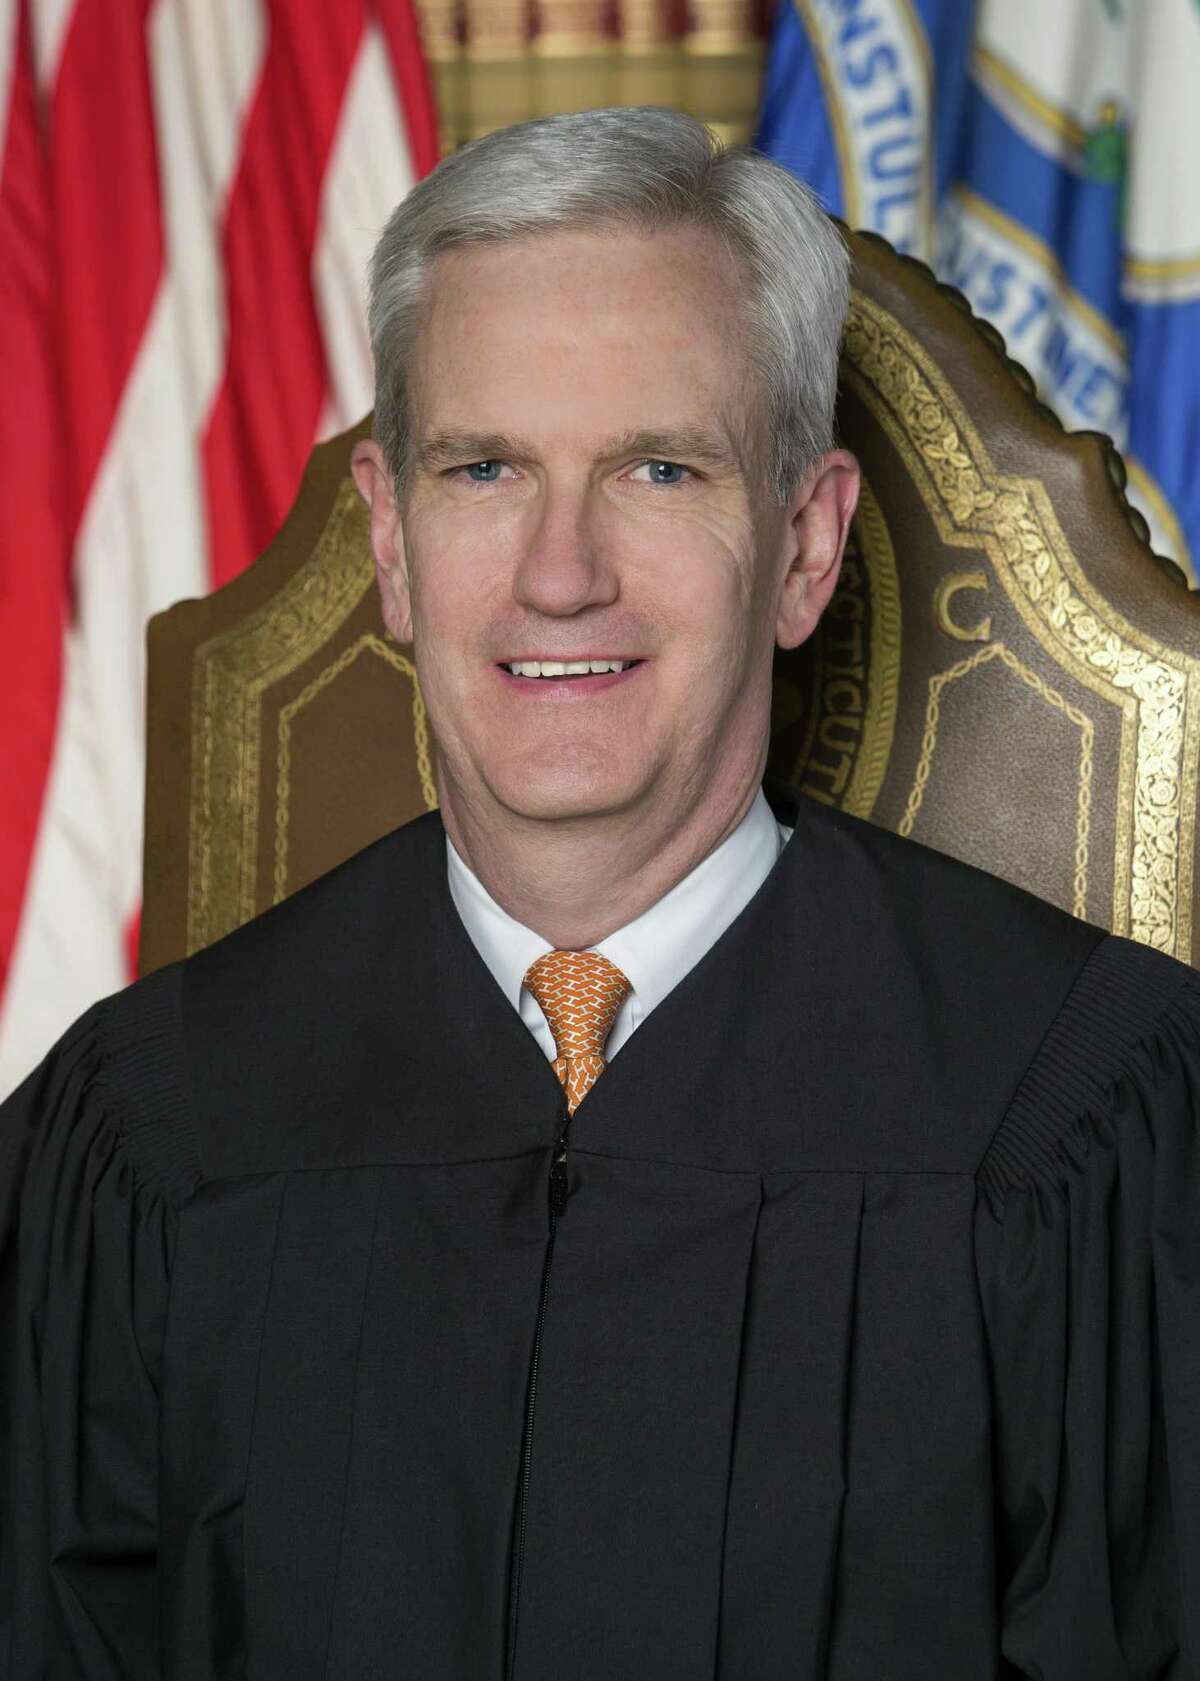 Justice Andrew J. McDonald